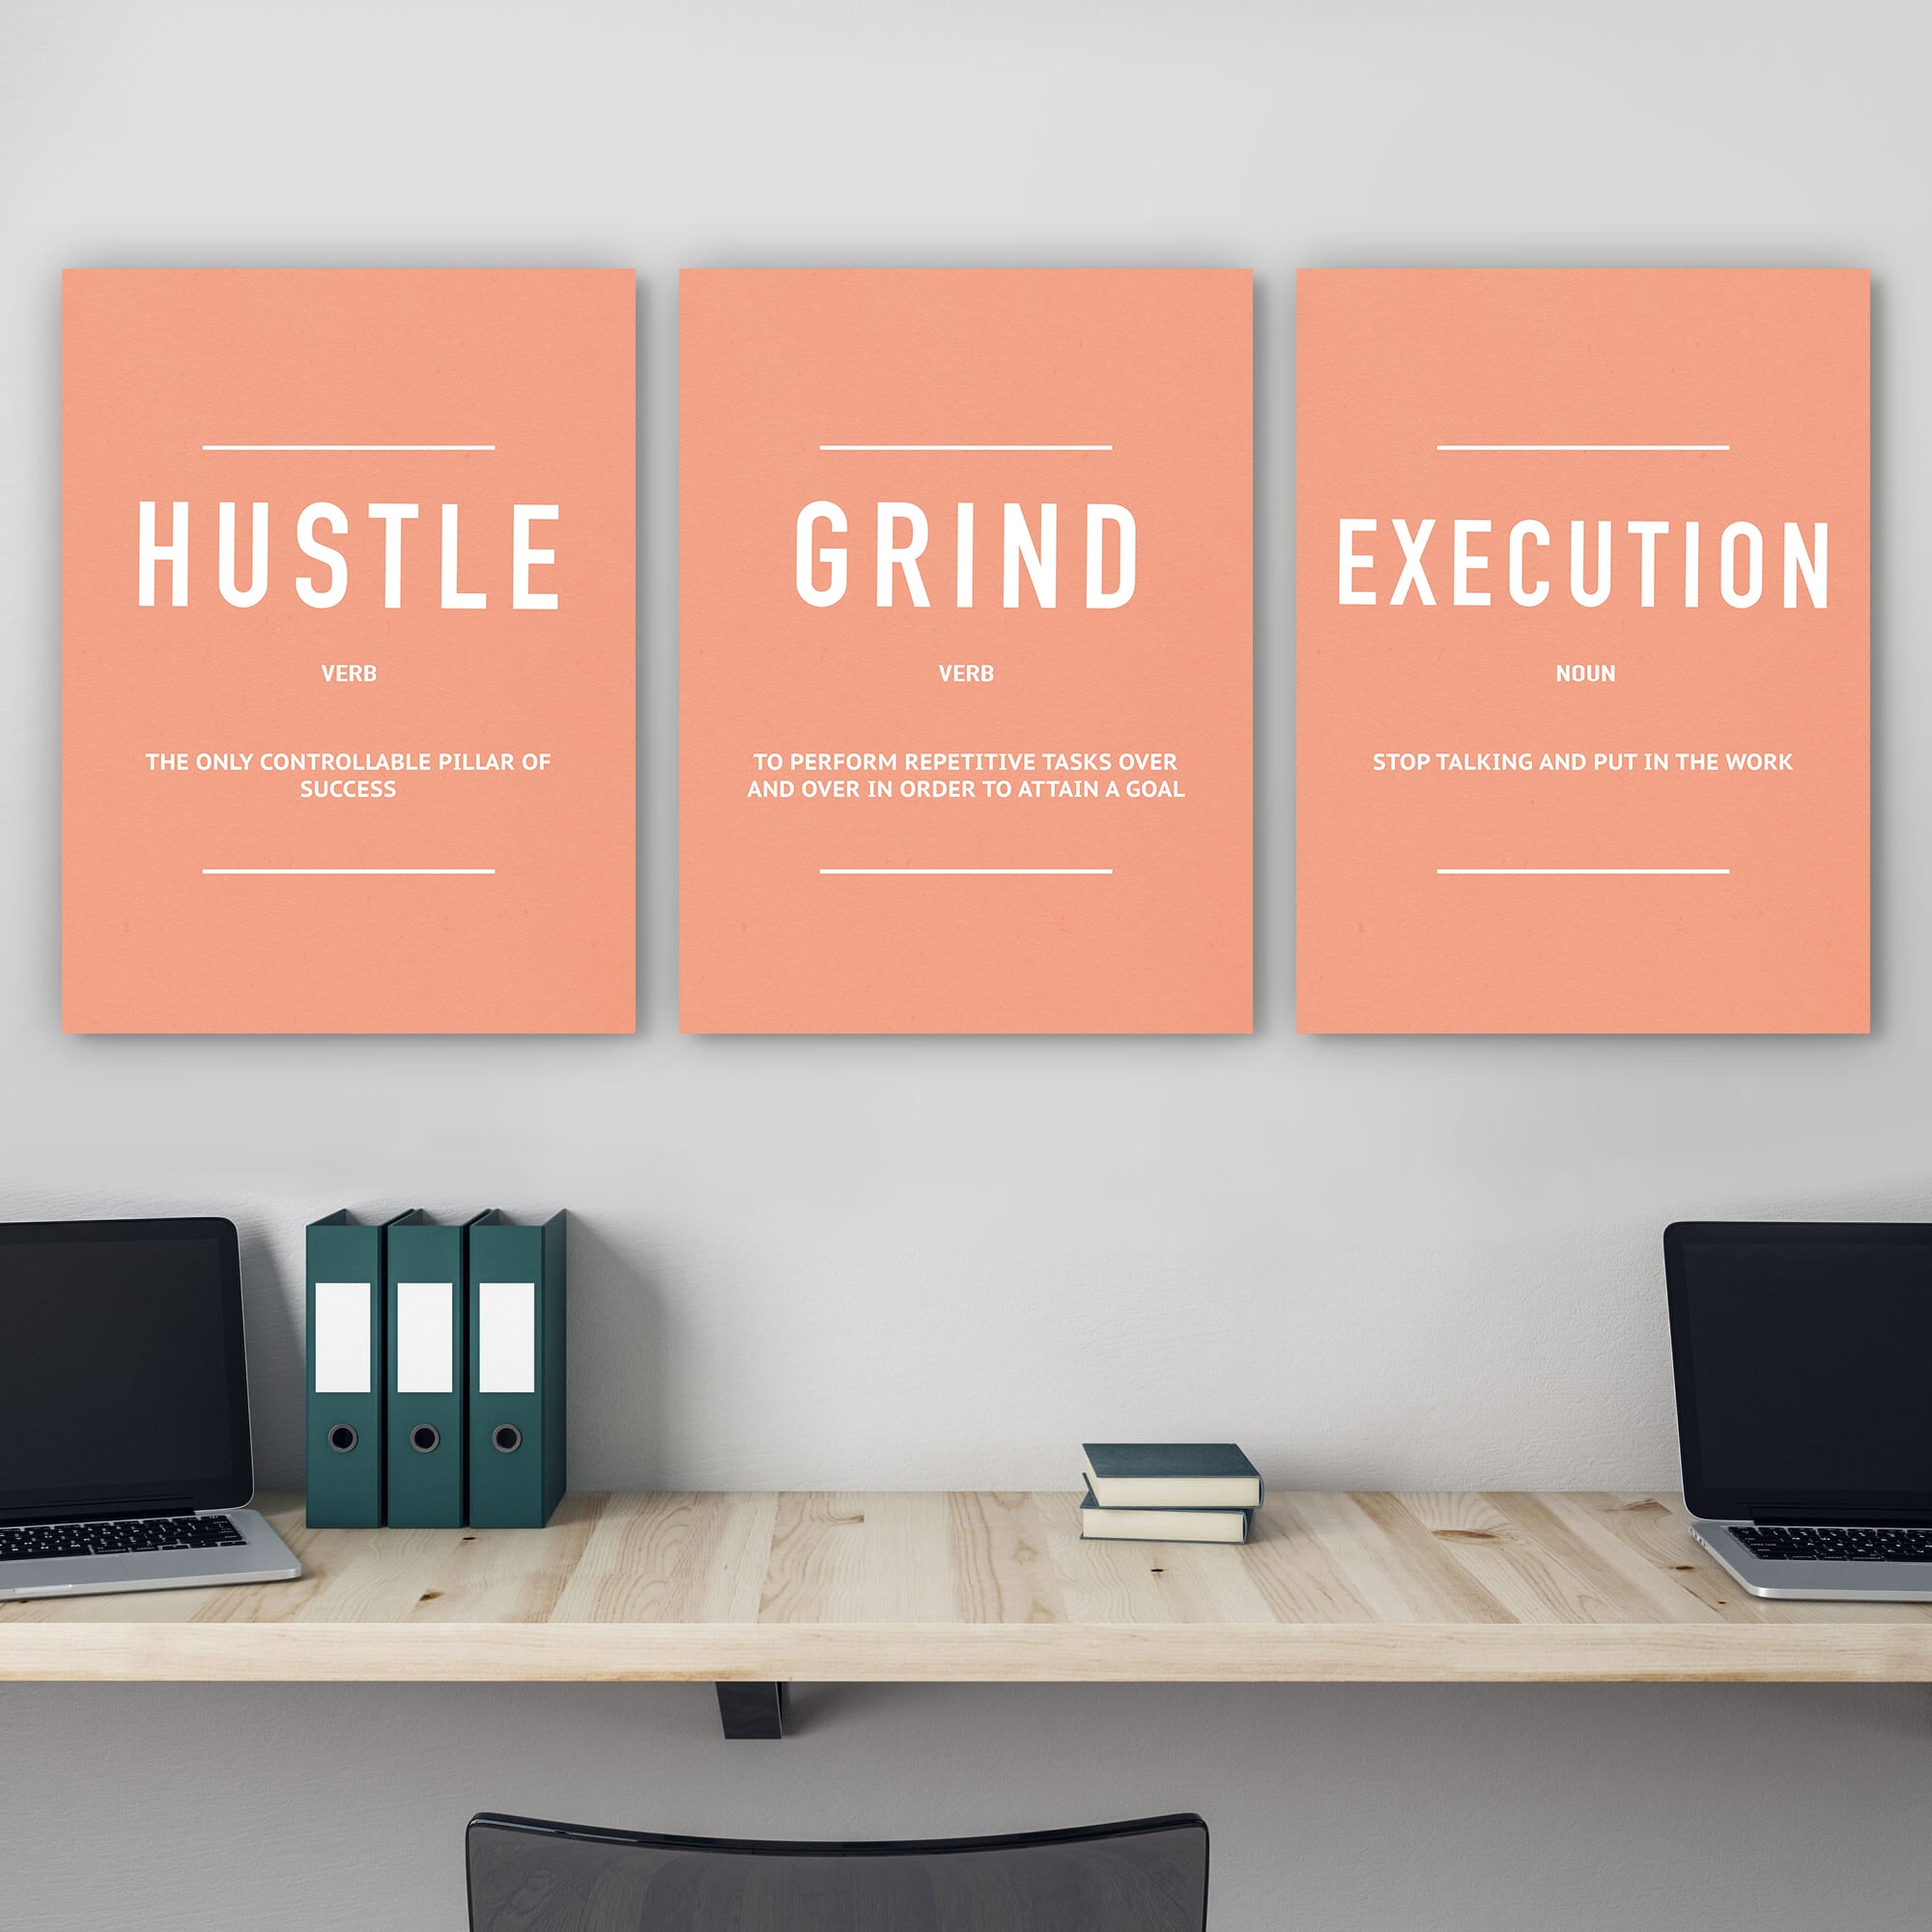 Hustle Verb Grind Verb Execution Noun Pink 3X Bundle - Stock Buddies -Canvas Wraps